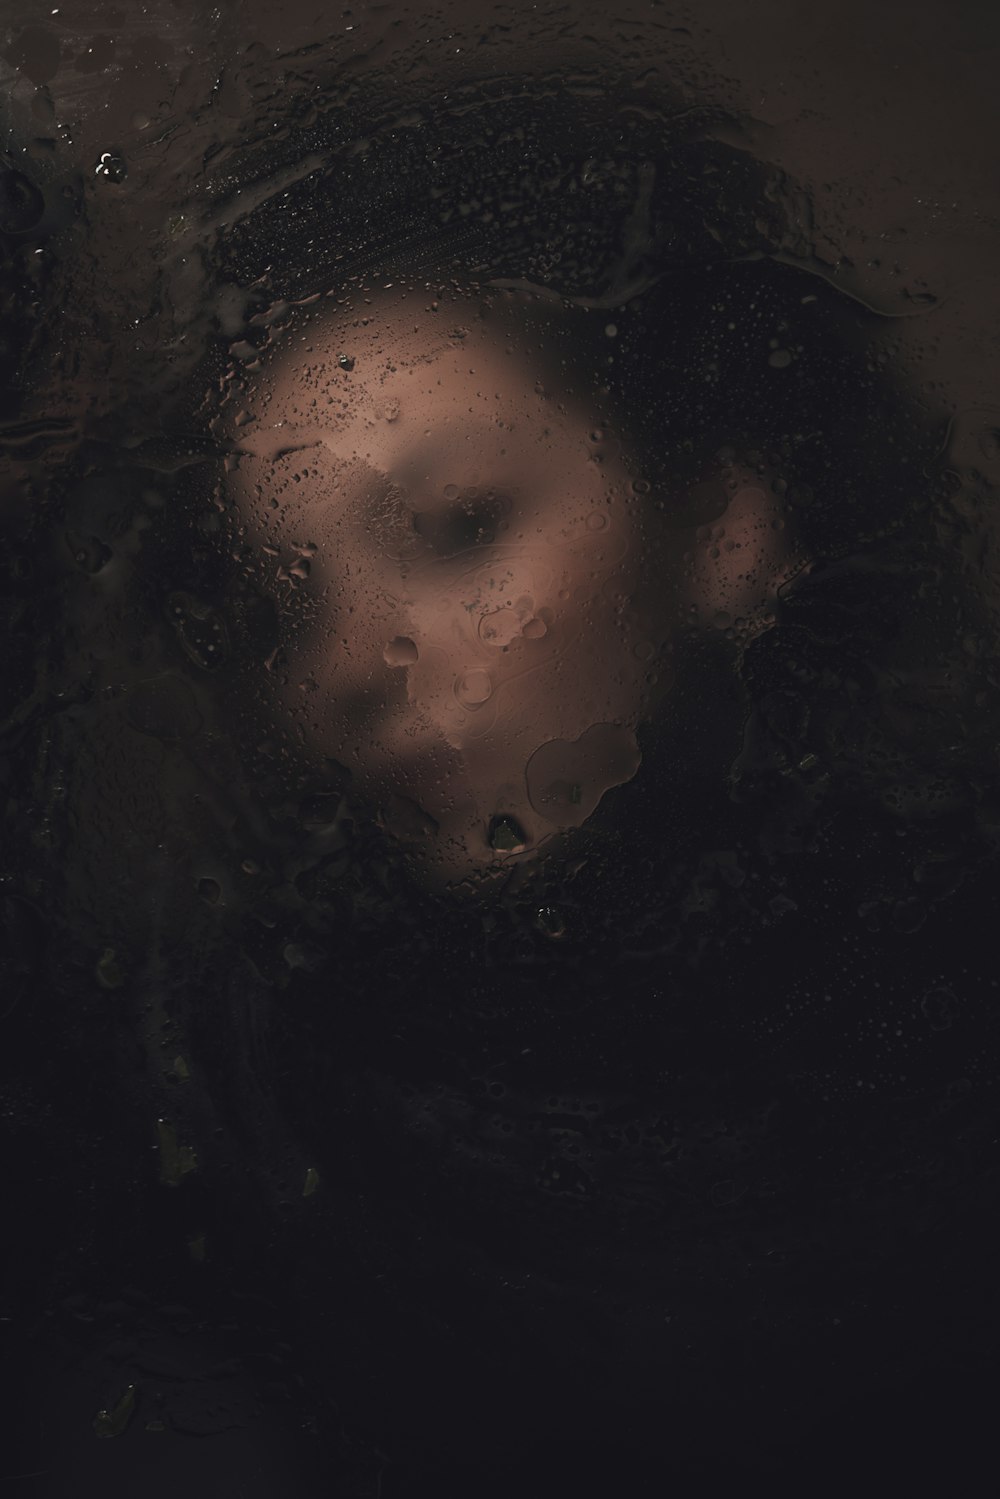 a woman's face is seen through a rain covered window